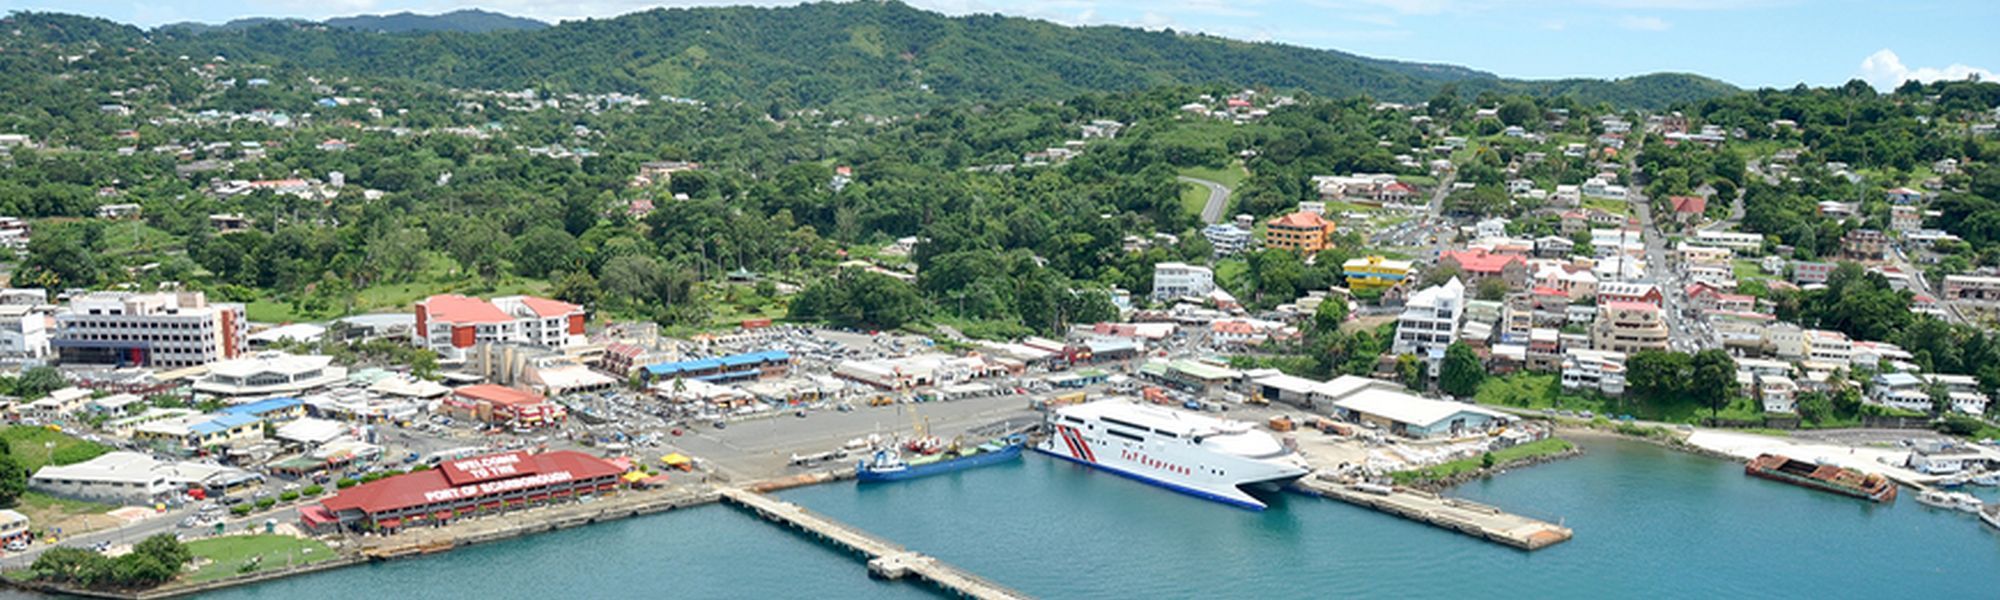 Tobago Cruise Market Analysis